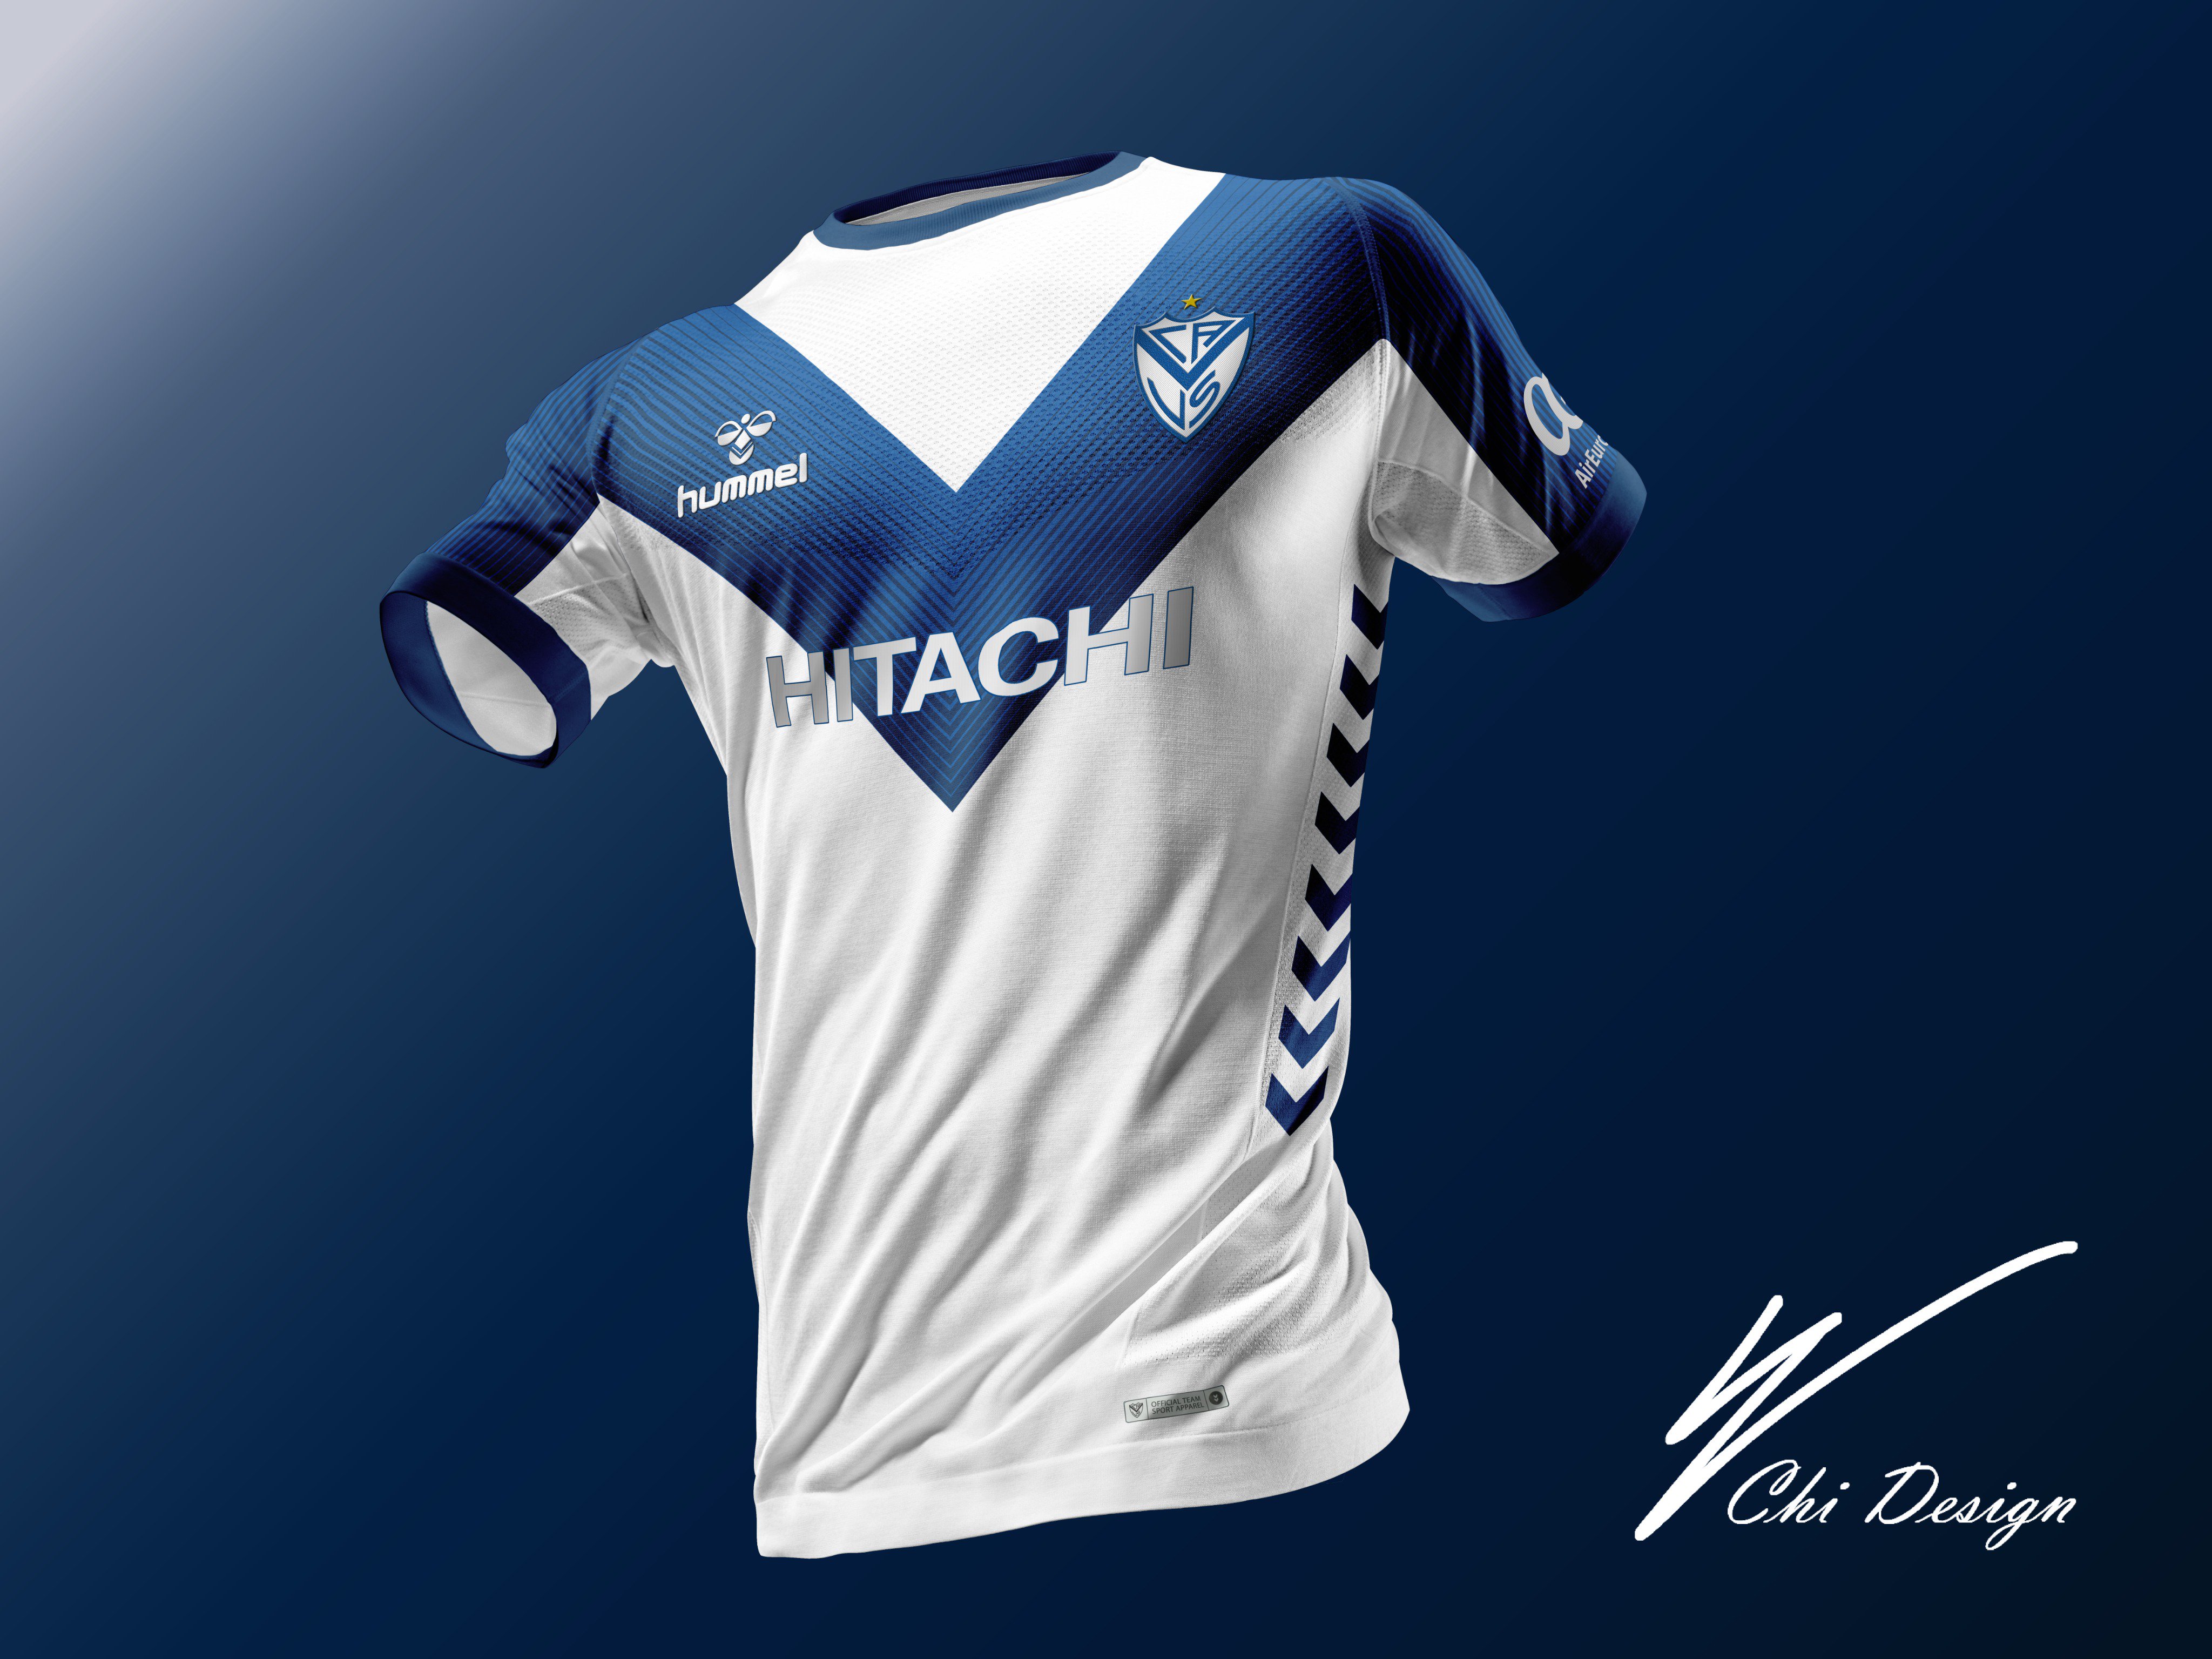 Design on Twitter: "VELEZ SARSFIELD X HUMMEL KIT #Vélez #Hummel #Fantasy #Argentina https://t.co/3alr0A3e2E" /